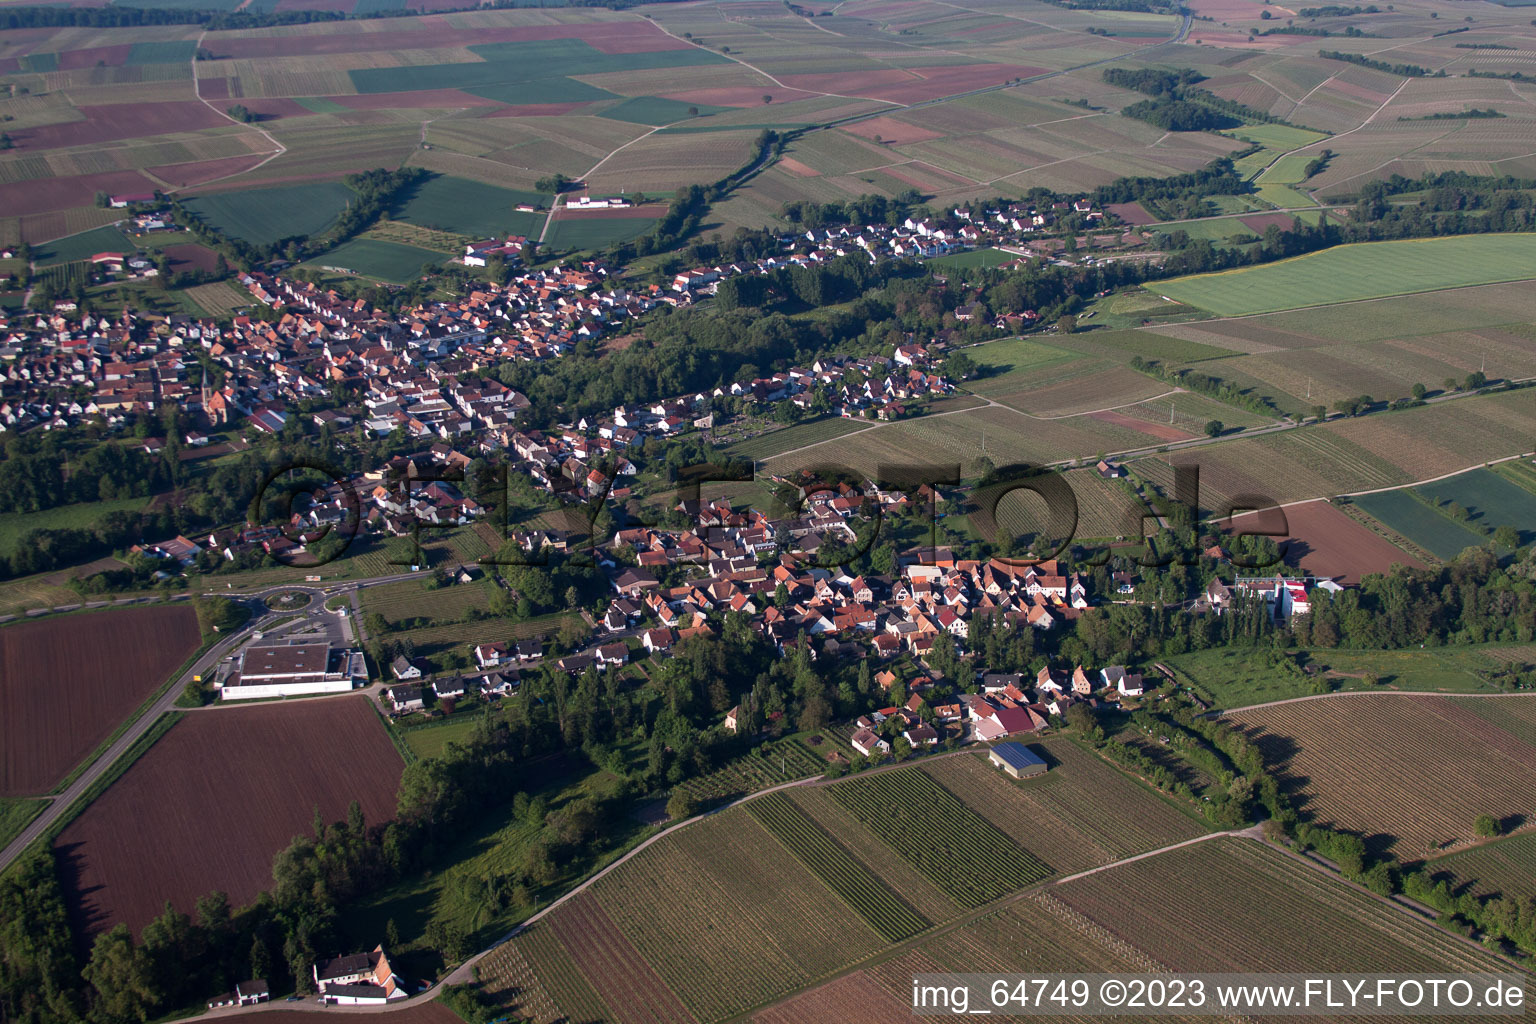 Aerial view of District Ingenheim in Billigheim-Ingenheim in the state Rhineland-Palatinate, Germany